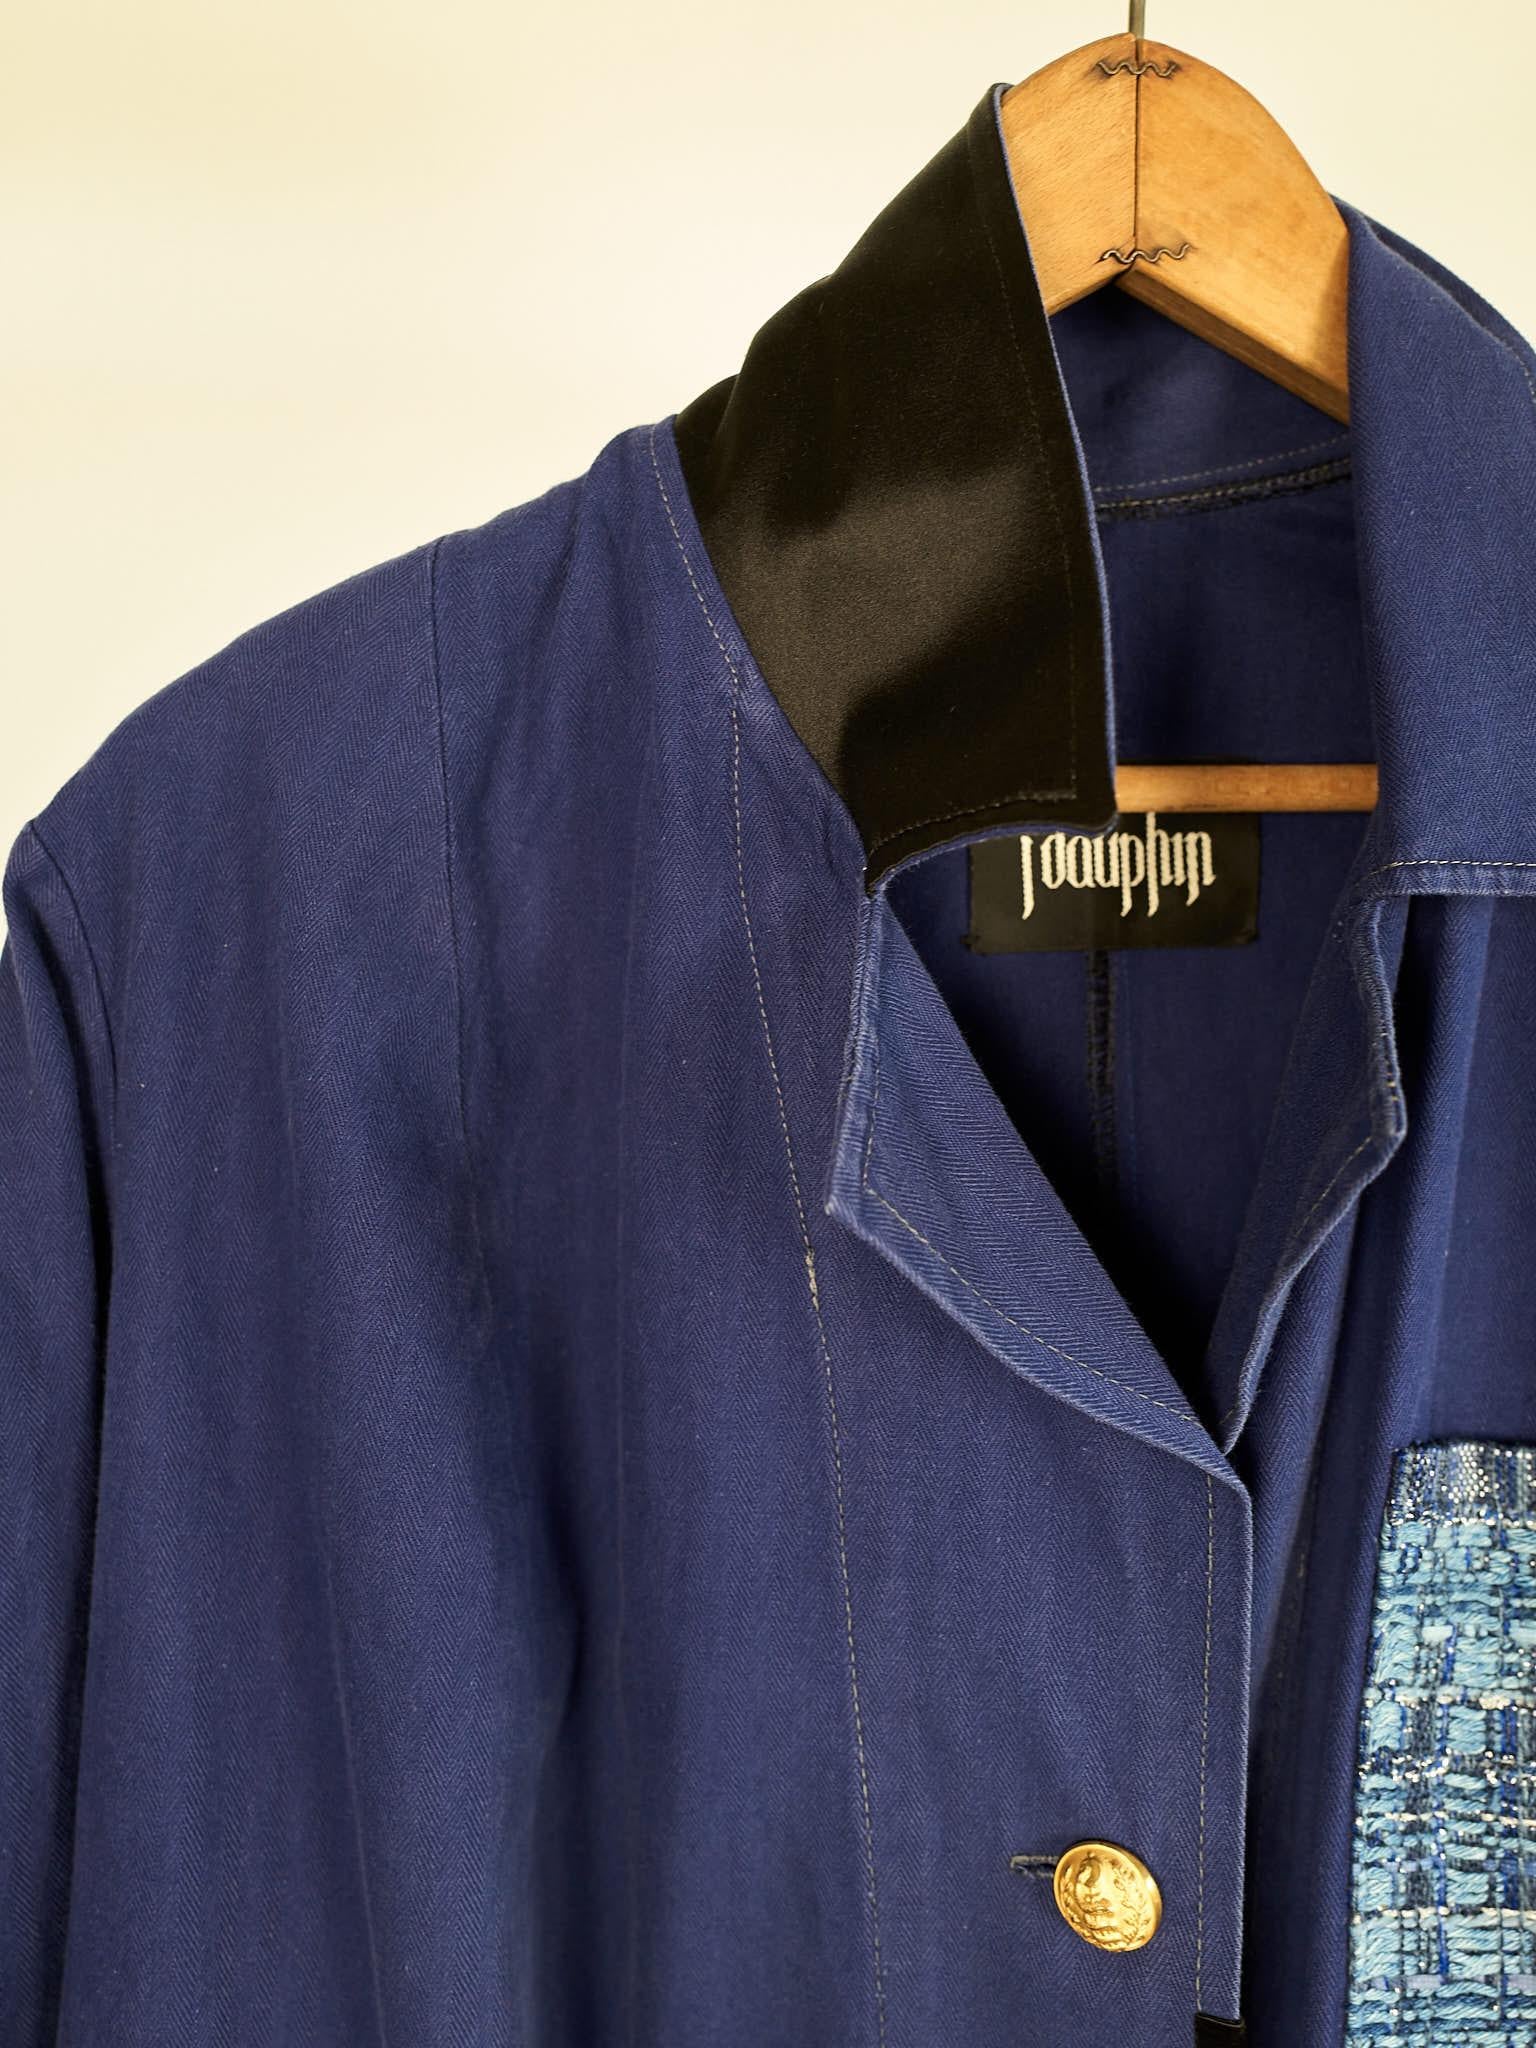 Women's Gold Lurex Tweed Jacket French Blue  Repurposed Vintage J Dauphin Medium